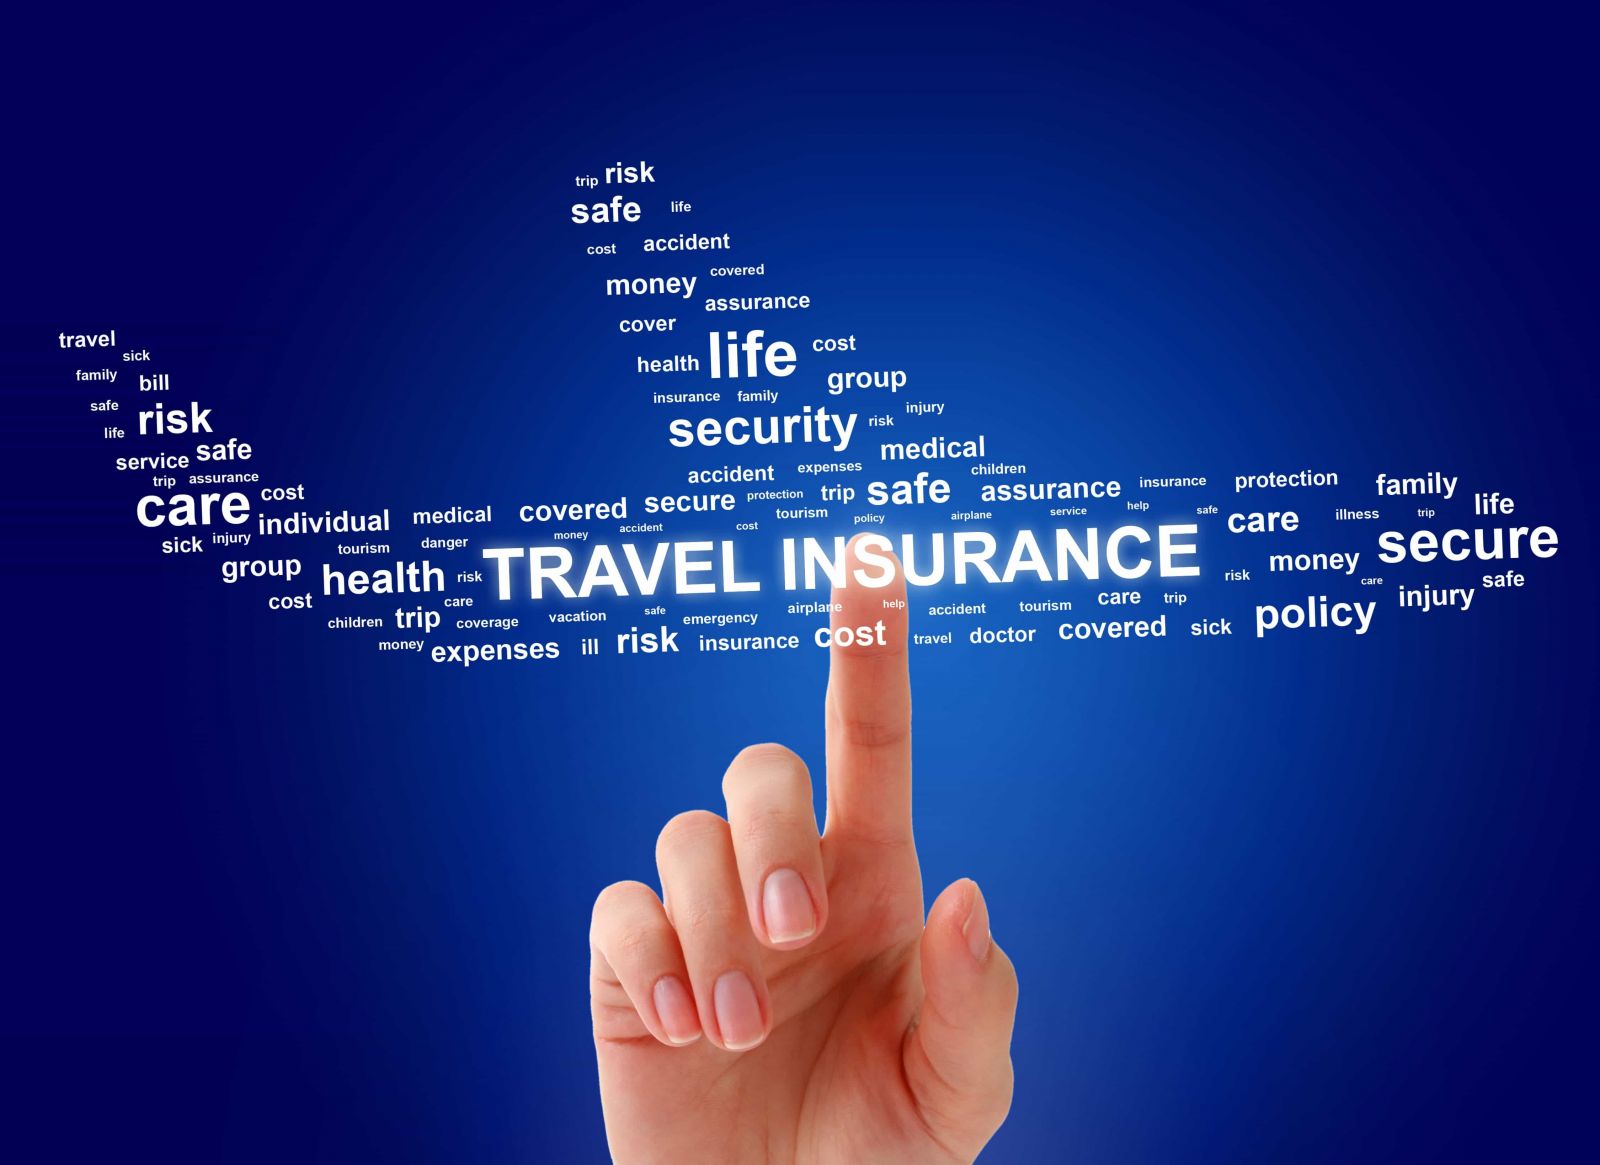 travel health insurance uk